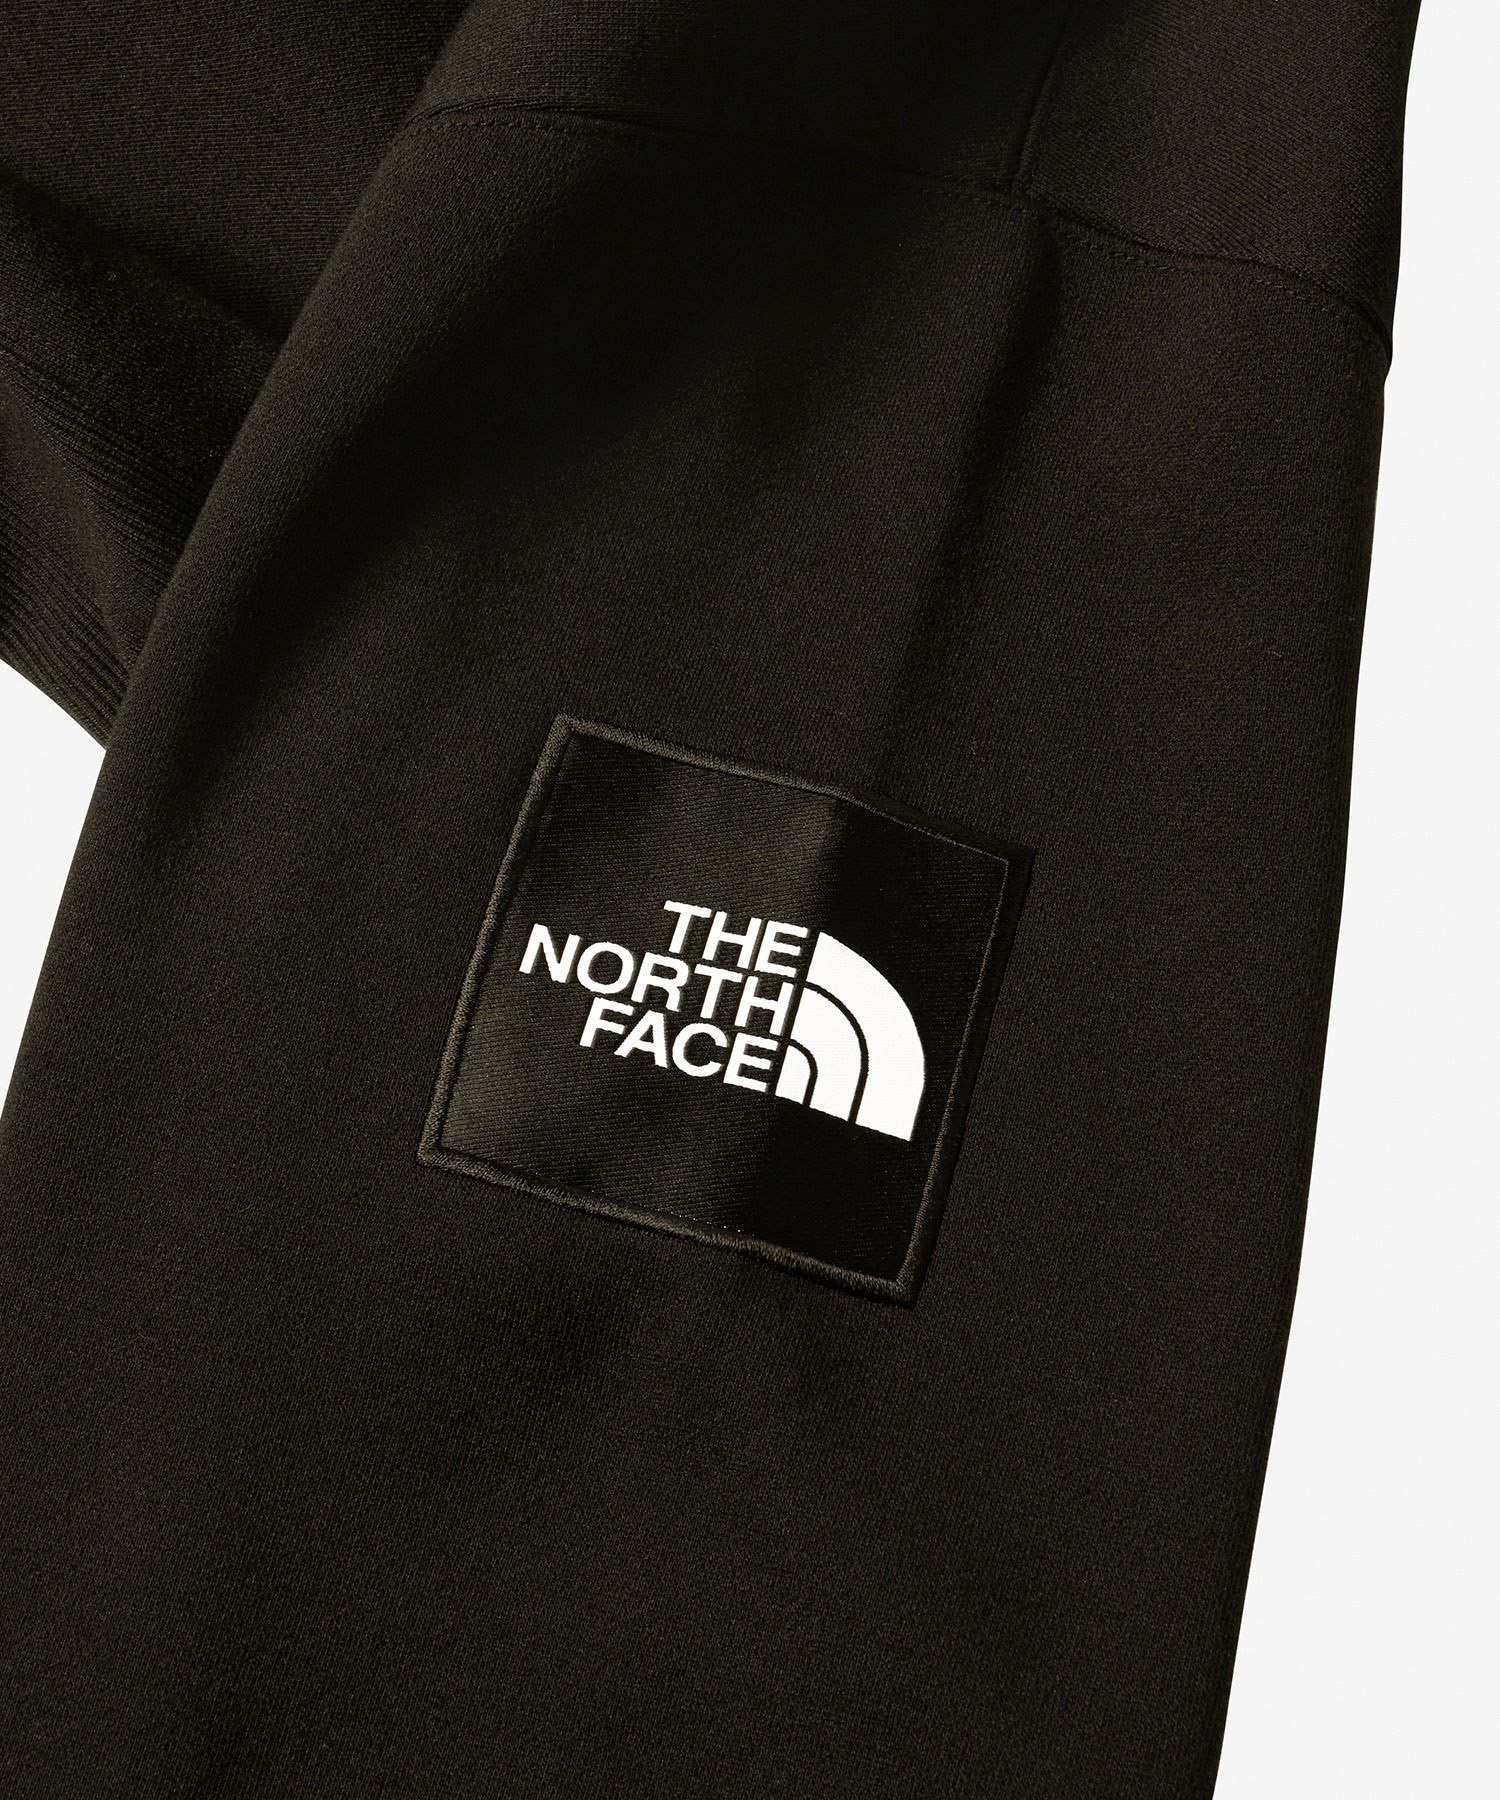 THE NORTH FACE/ザ・ノース・フェイス Square Logo Hoodie スクエア ...